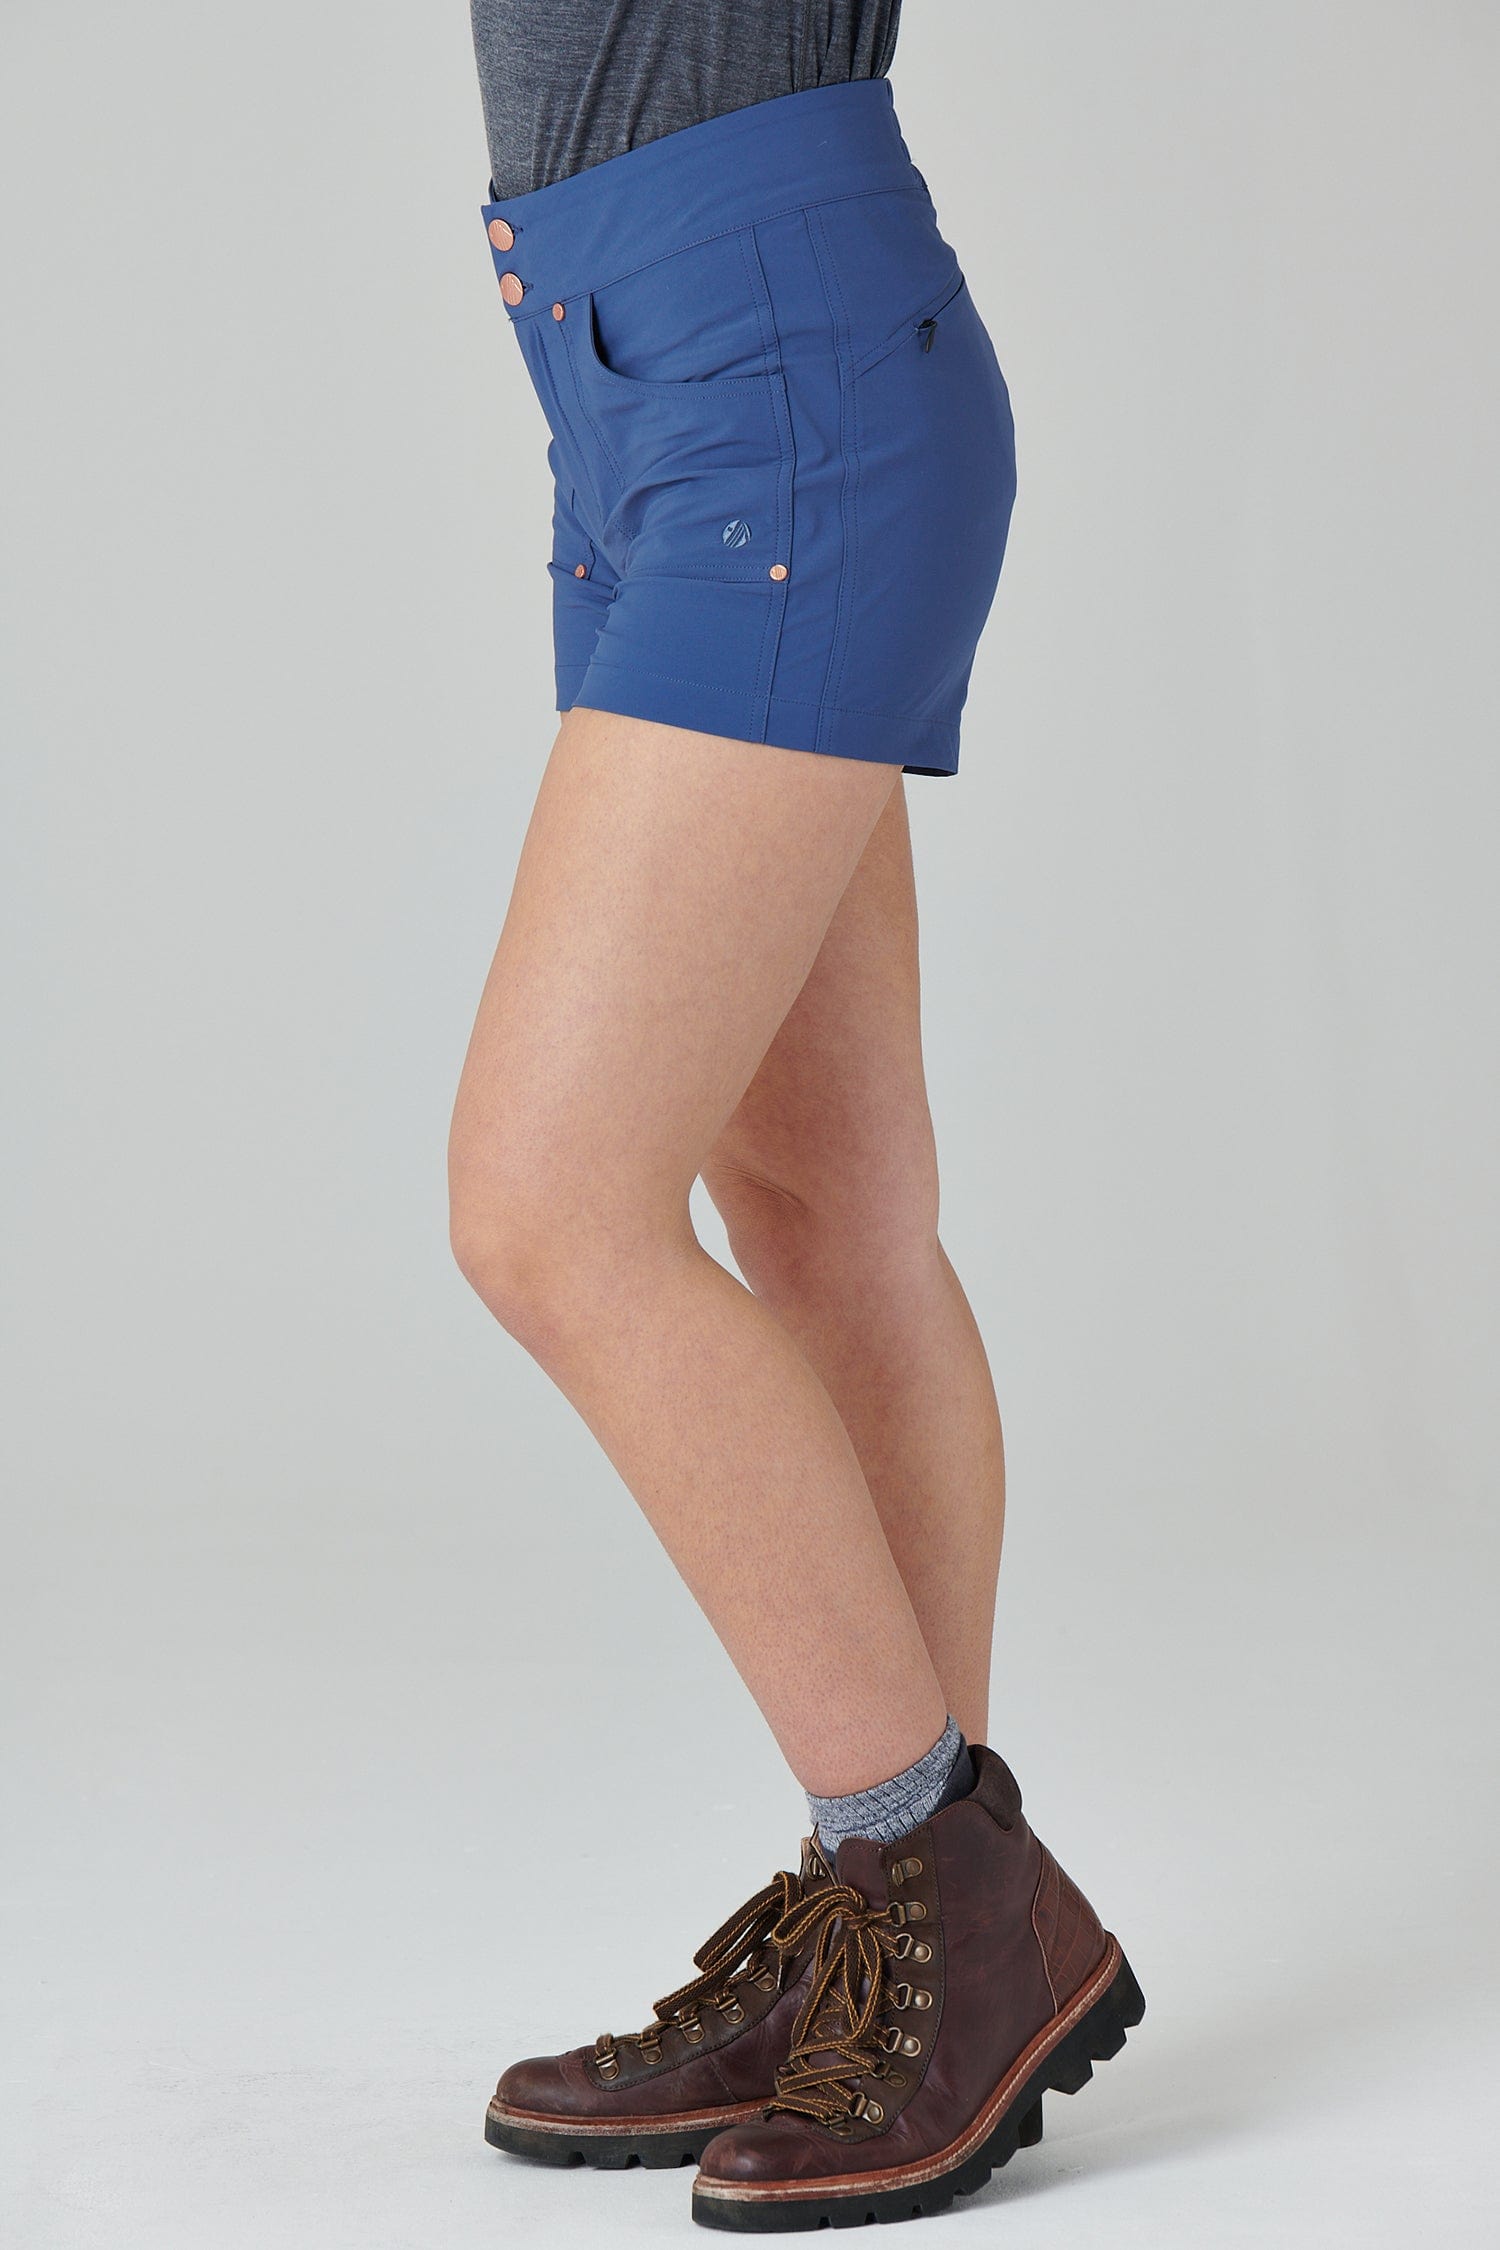 Trek Shorts - Steel Blue - 28 / Uk10 - Womens - Acai Outdoorwear